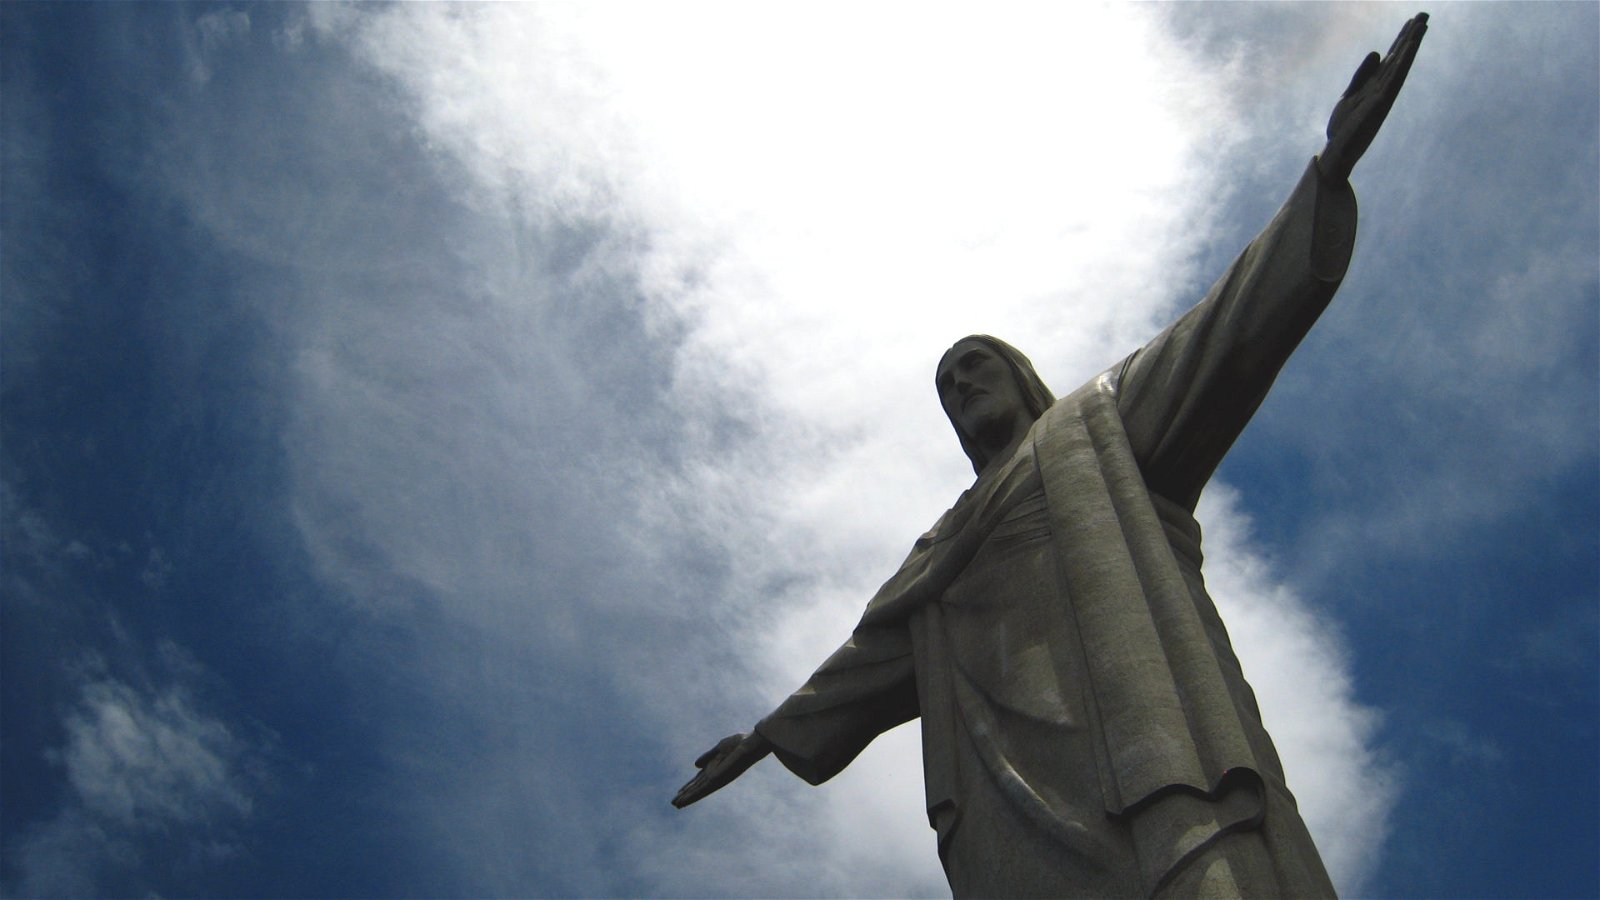 Christ The Redeemer Statue Wikipedia